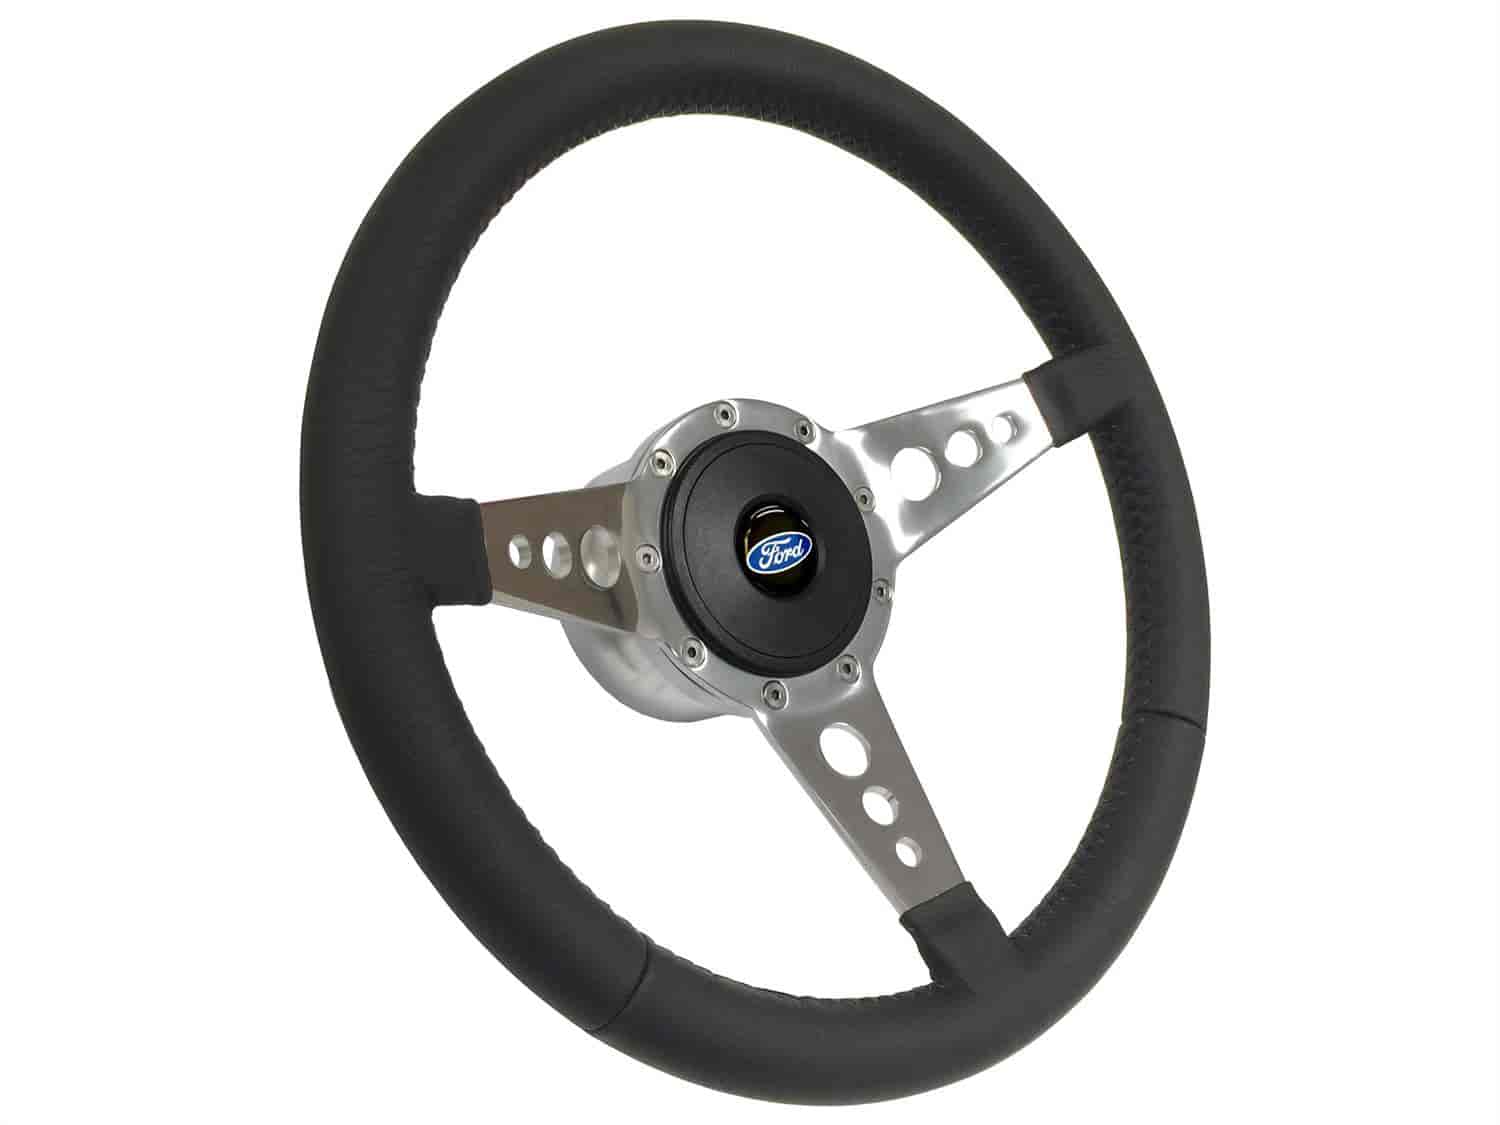 S9 Sport Steering Wheel Kit 1968-1991 Ford/Mercury, 14 in. Diameter, Premium Black Leather Grip, w/ 9-Bolt Adapter & Horn Button